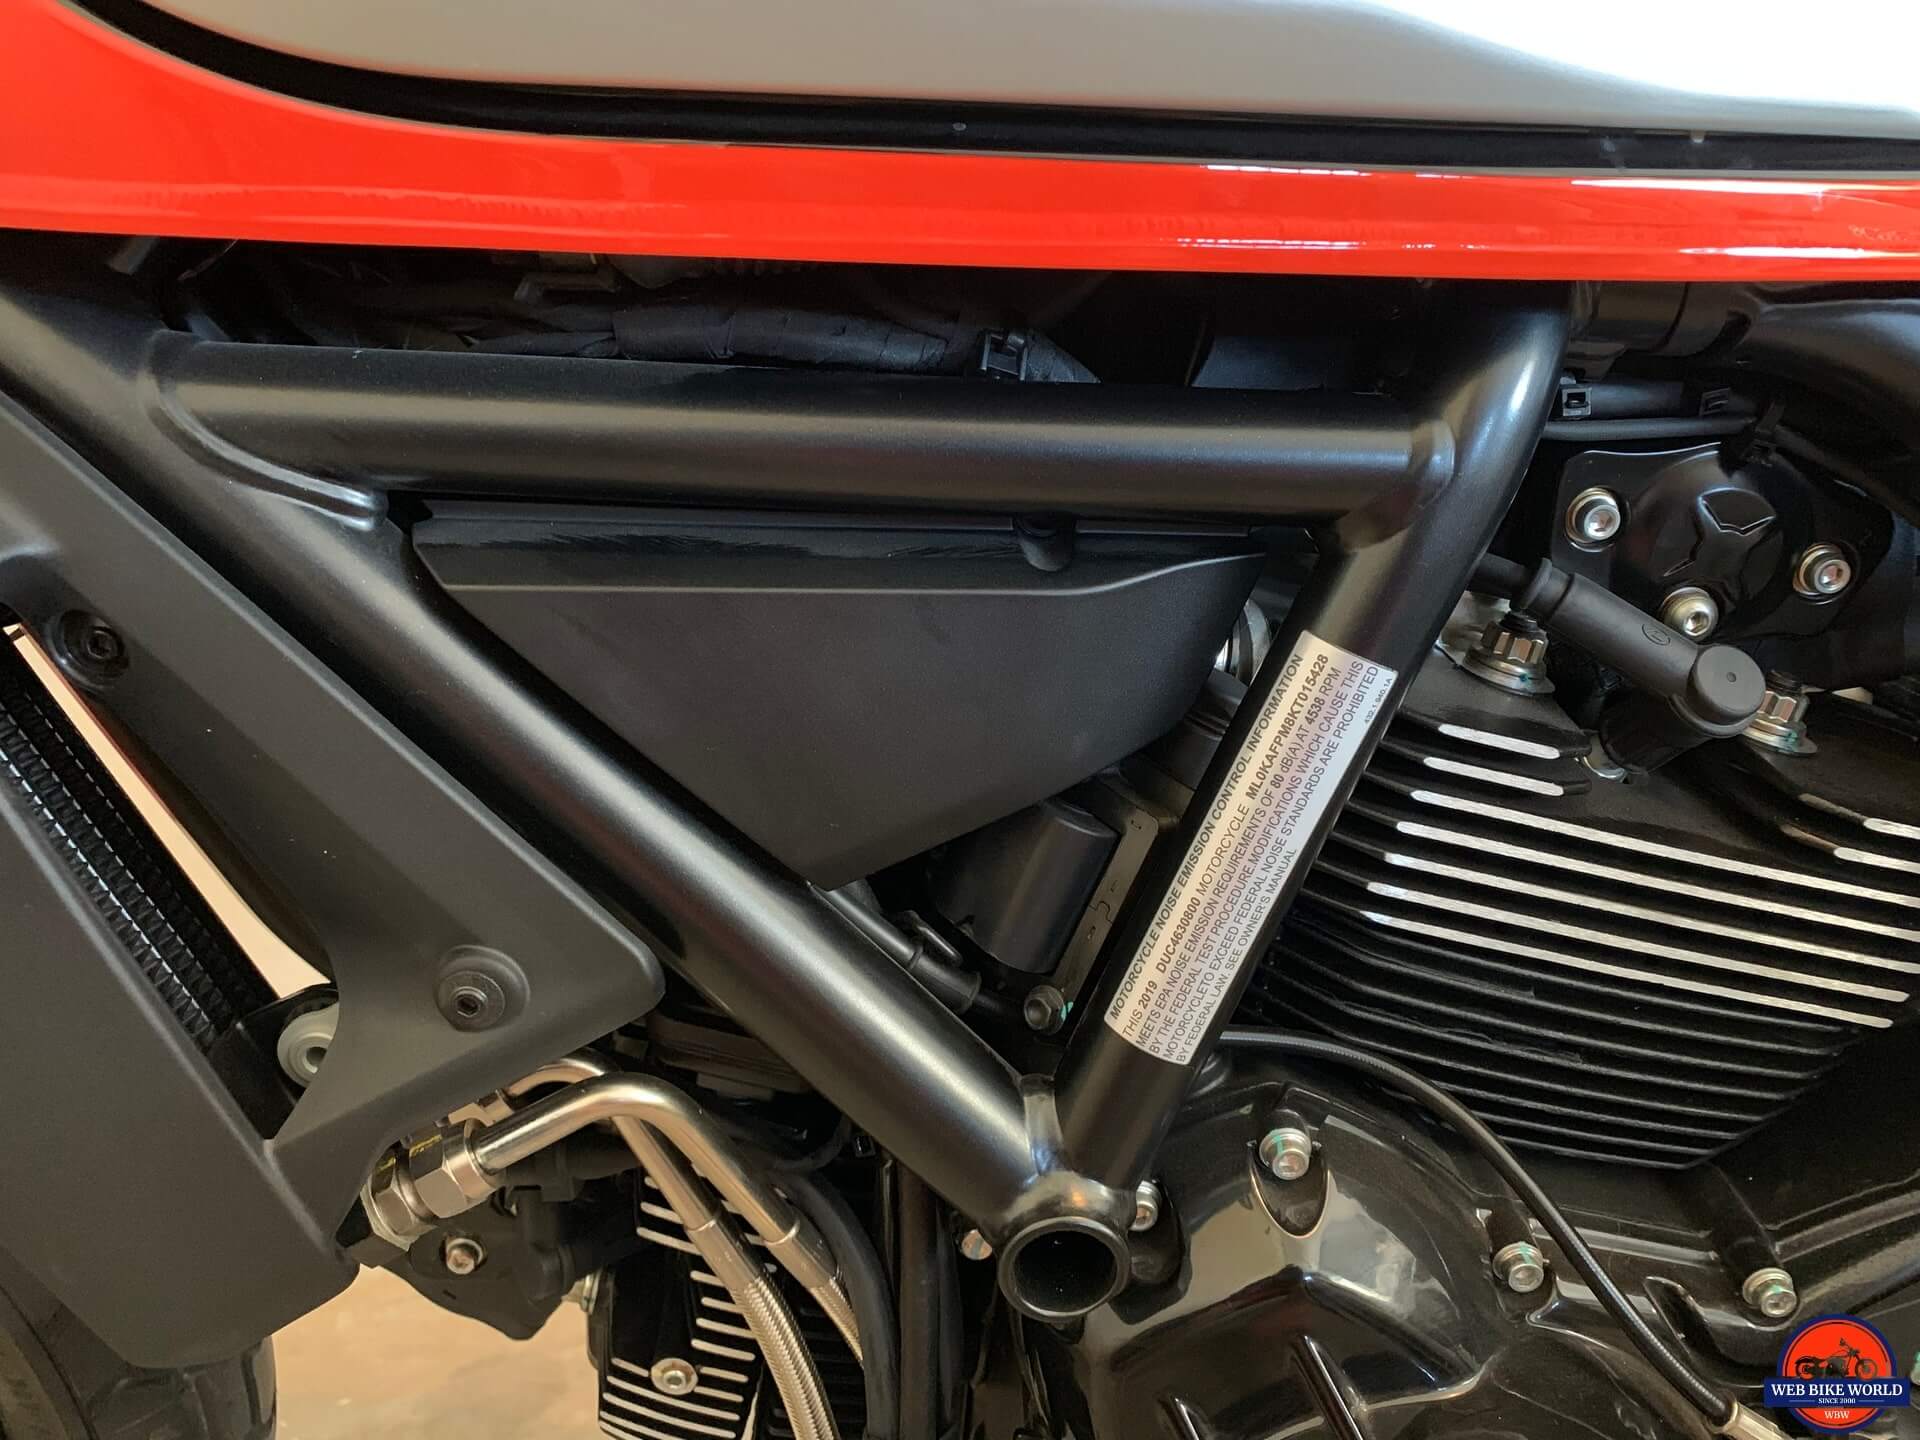 2019 Ducati Scrambler Cafe Racer Buyer's Guide: Specs, Photos, Price